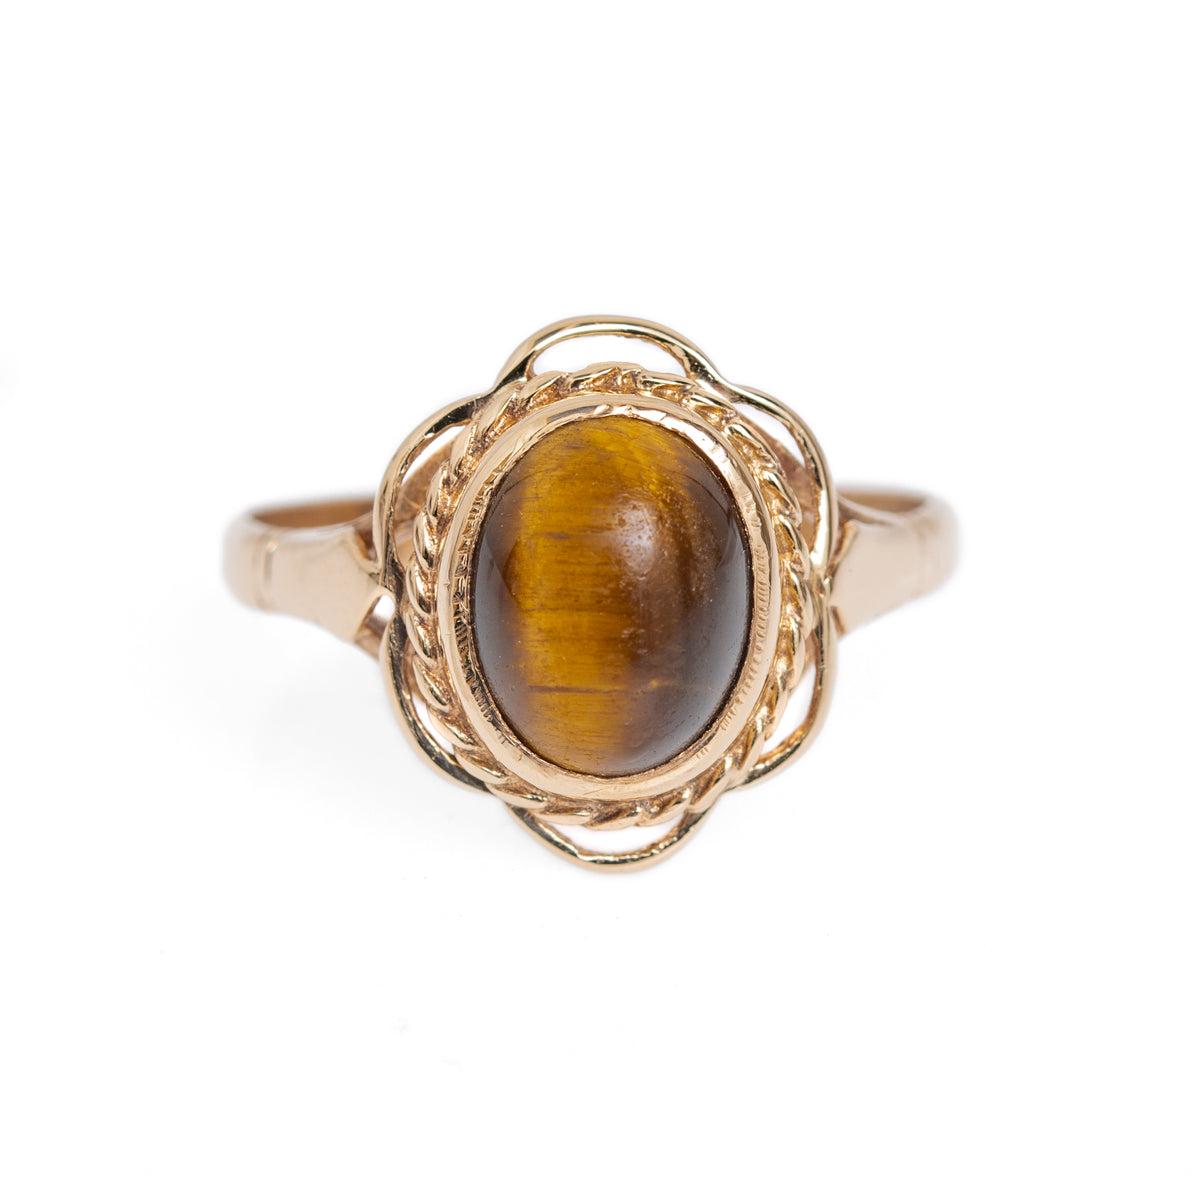 Vintage 9ct Gold Tigers Eye Cabochon Ring With Decorative Mount Birmingham Hallmark 1970 (Code A1028)